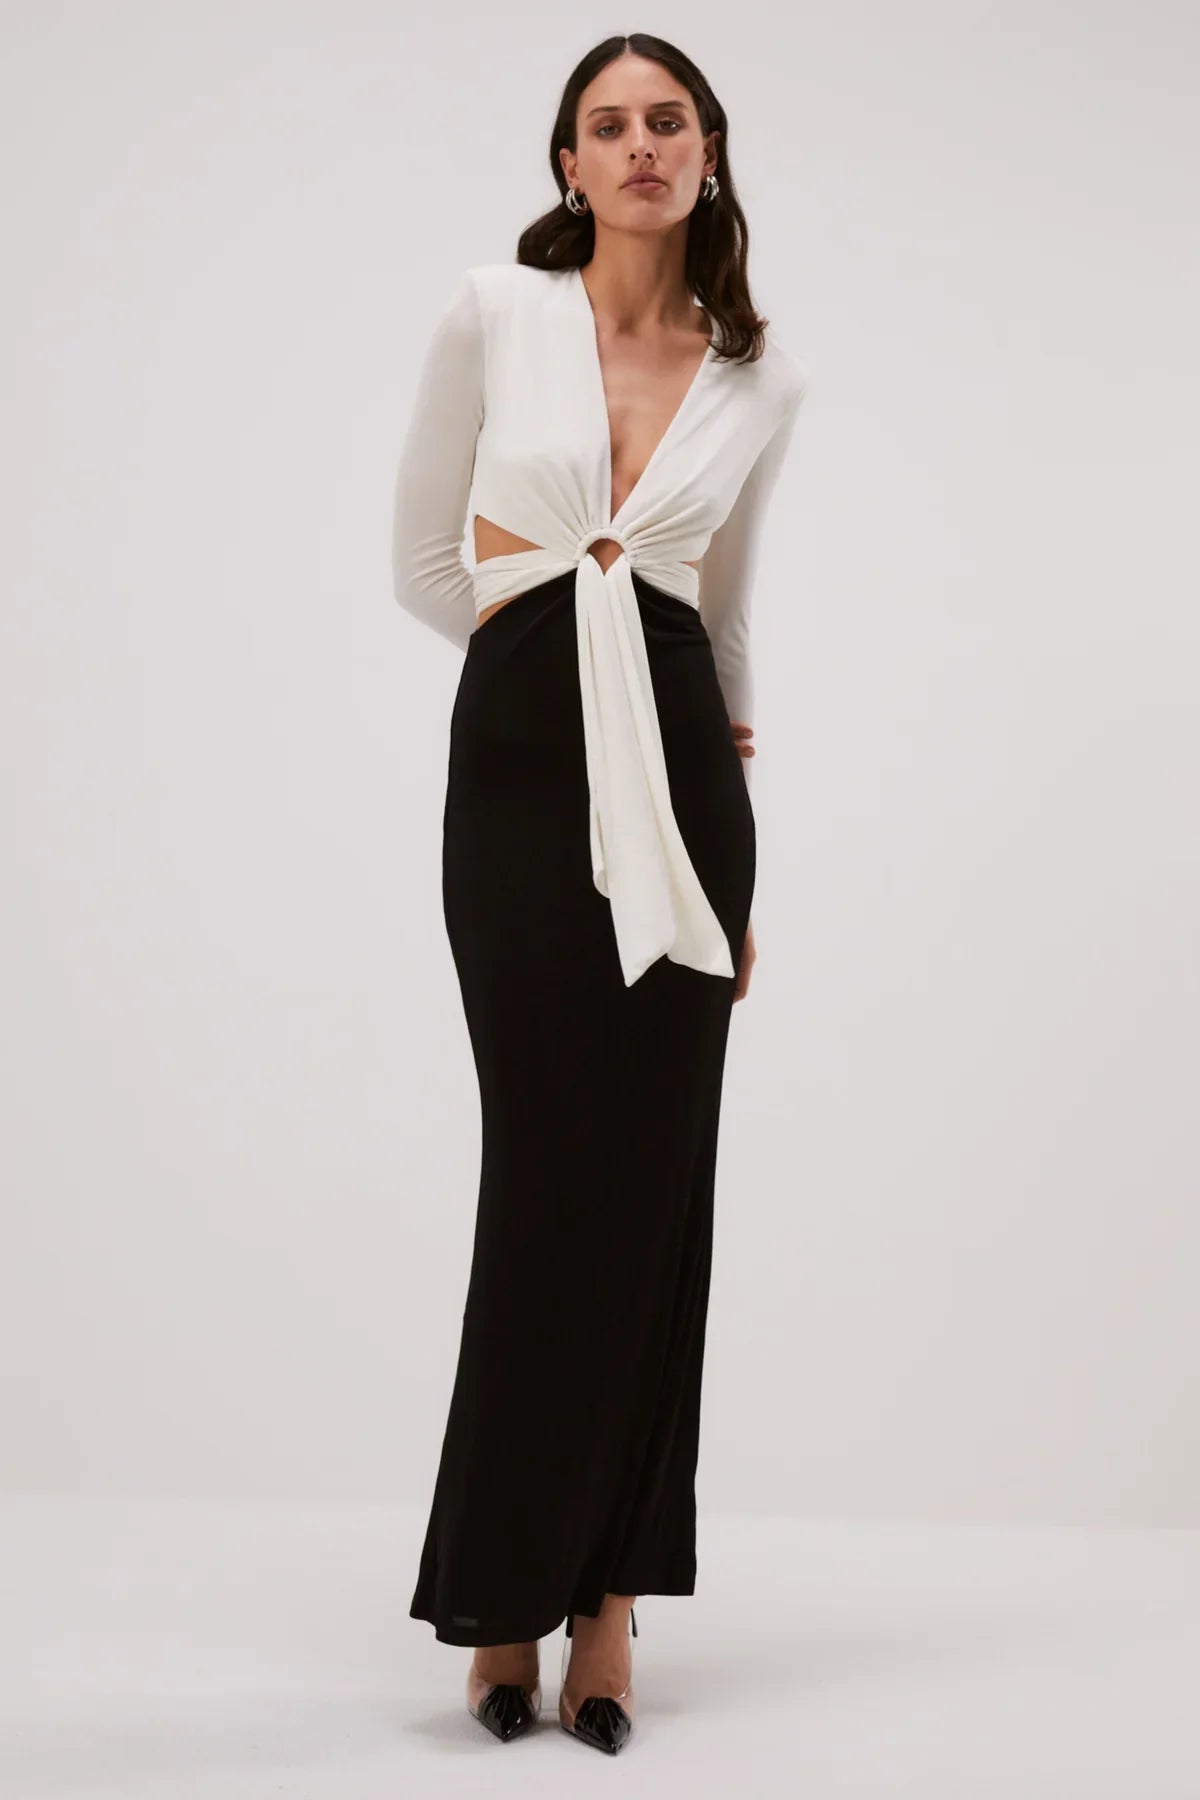 Misha Aldina Contrast Slinky Jersey Dress - Ivory/Black - JAUS